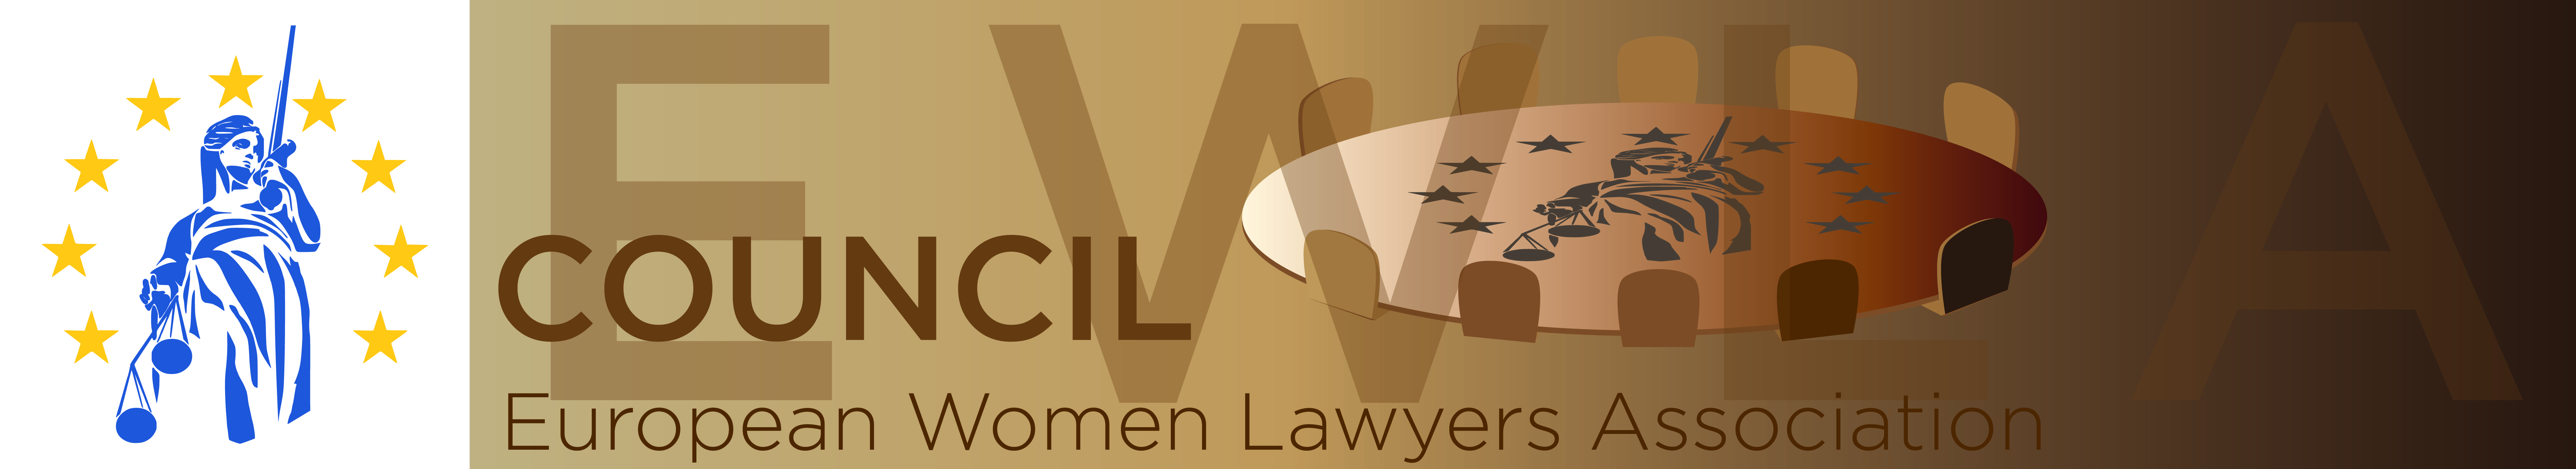 EWLA Council - European Women Lawyers Association